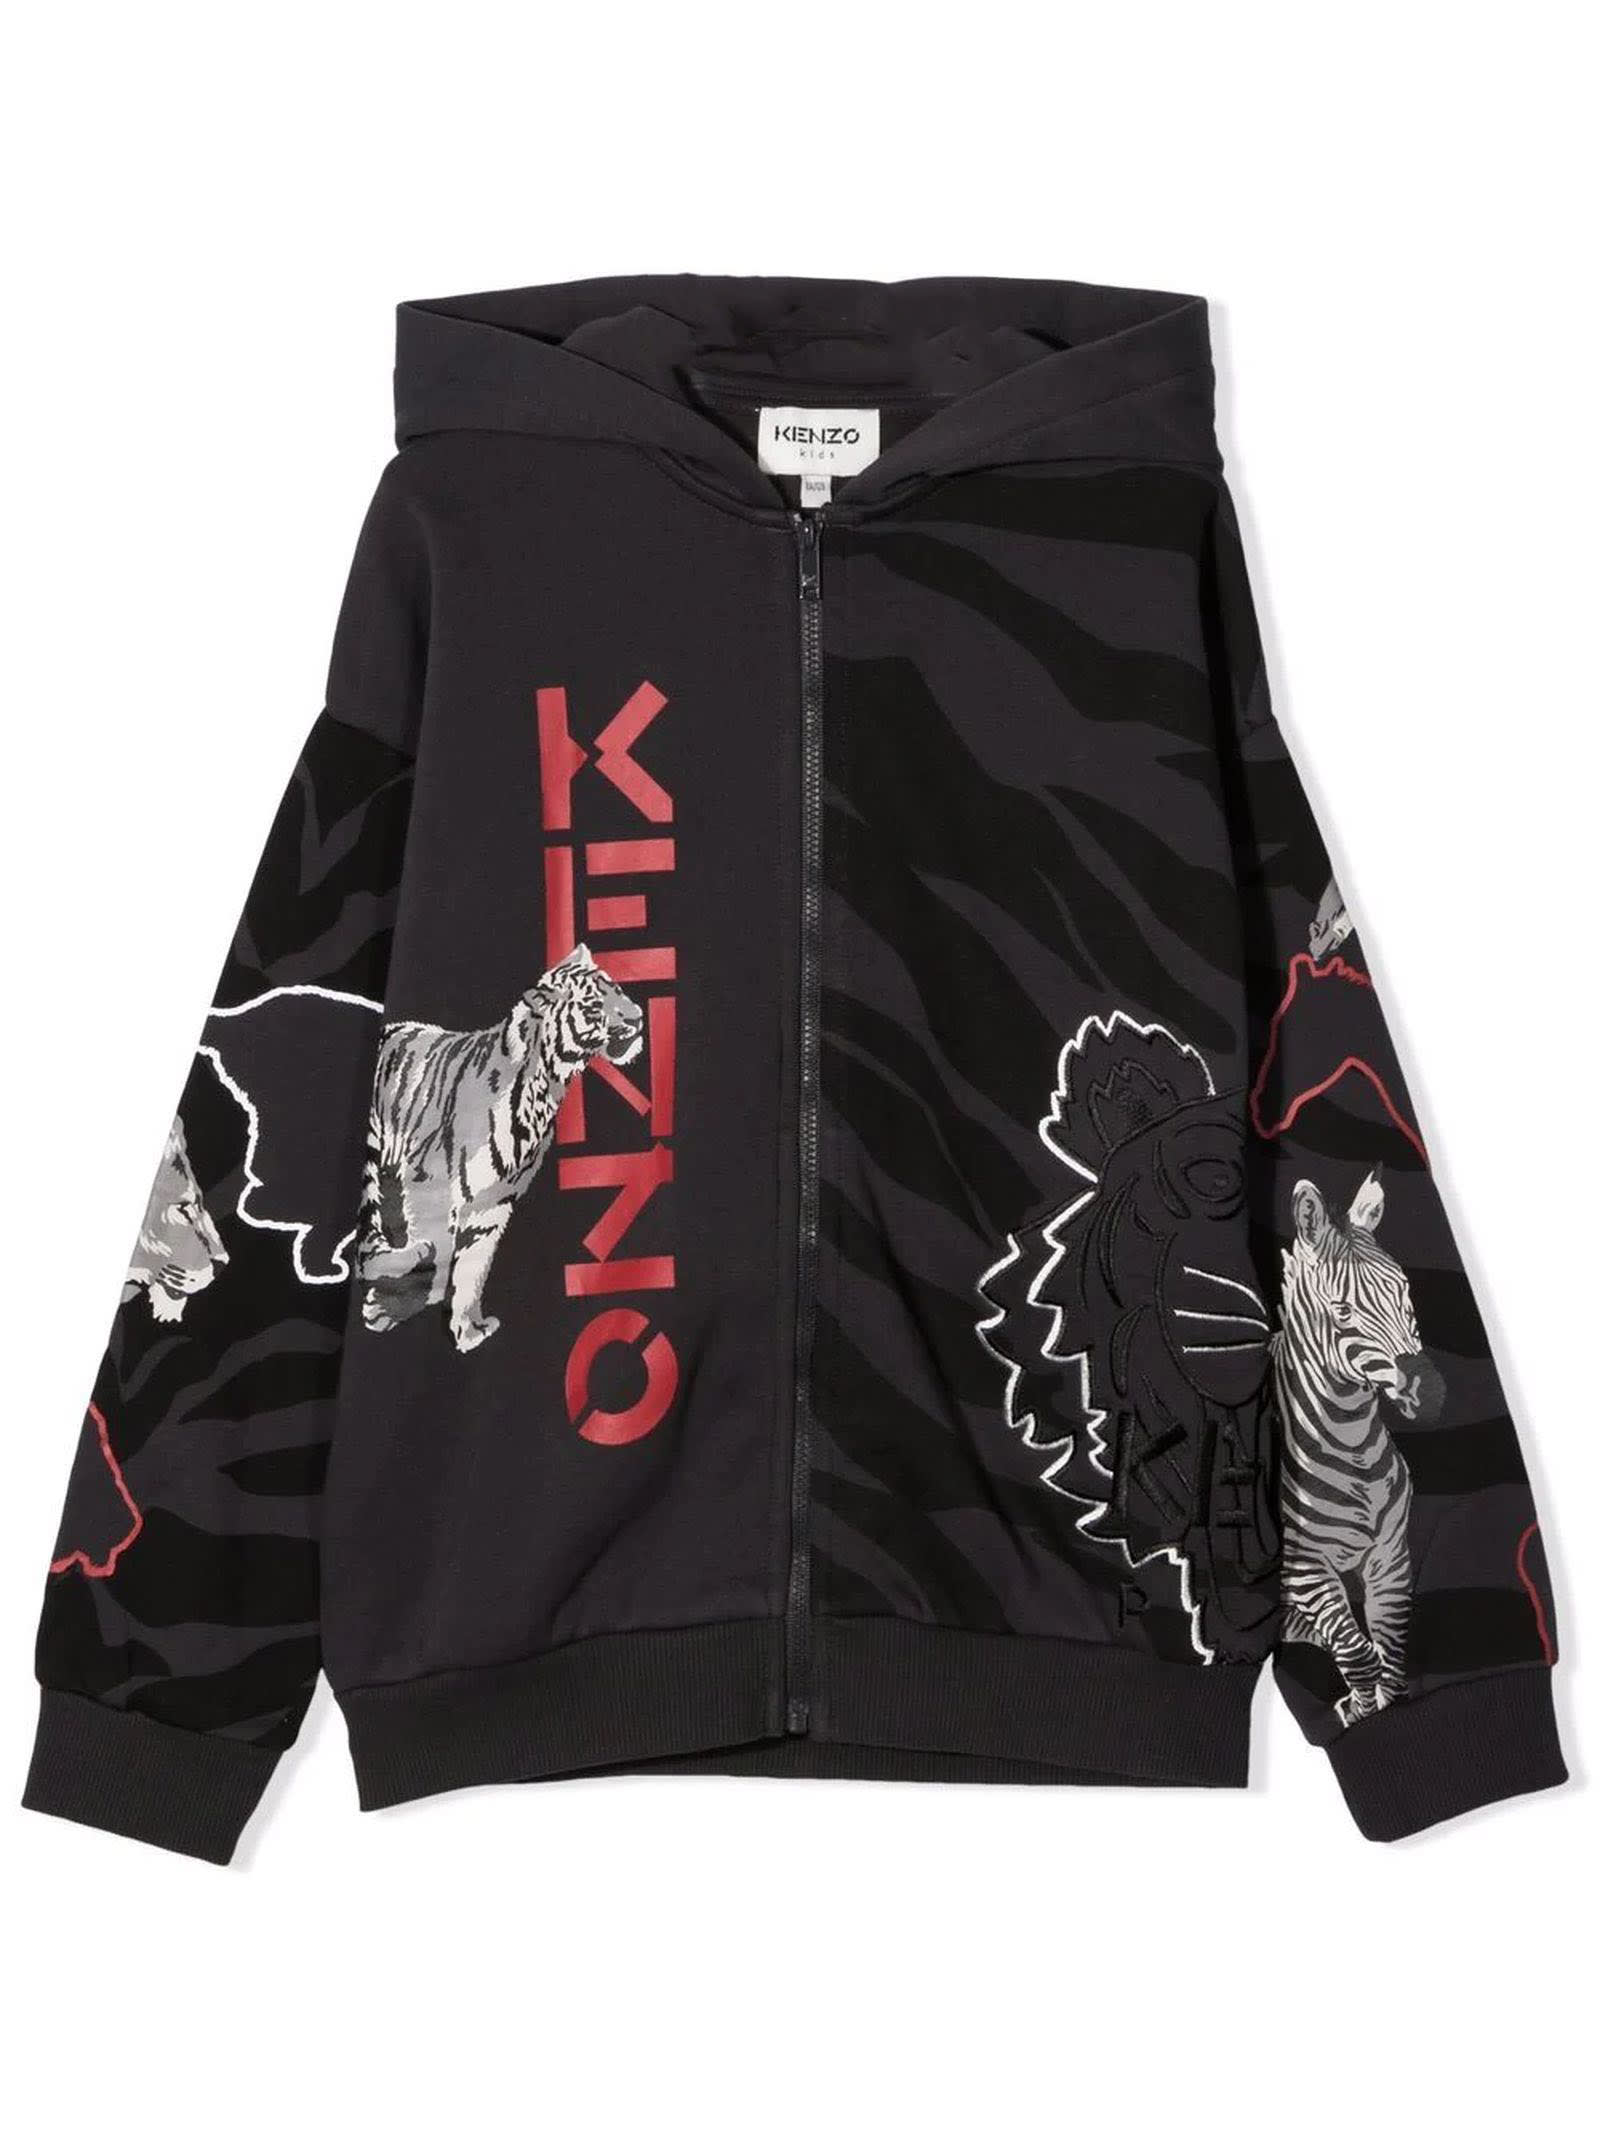 Kenzo Black Cotton Jacket